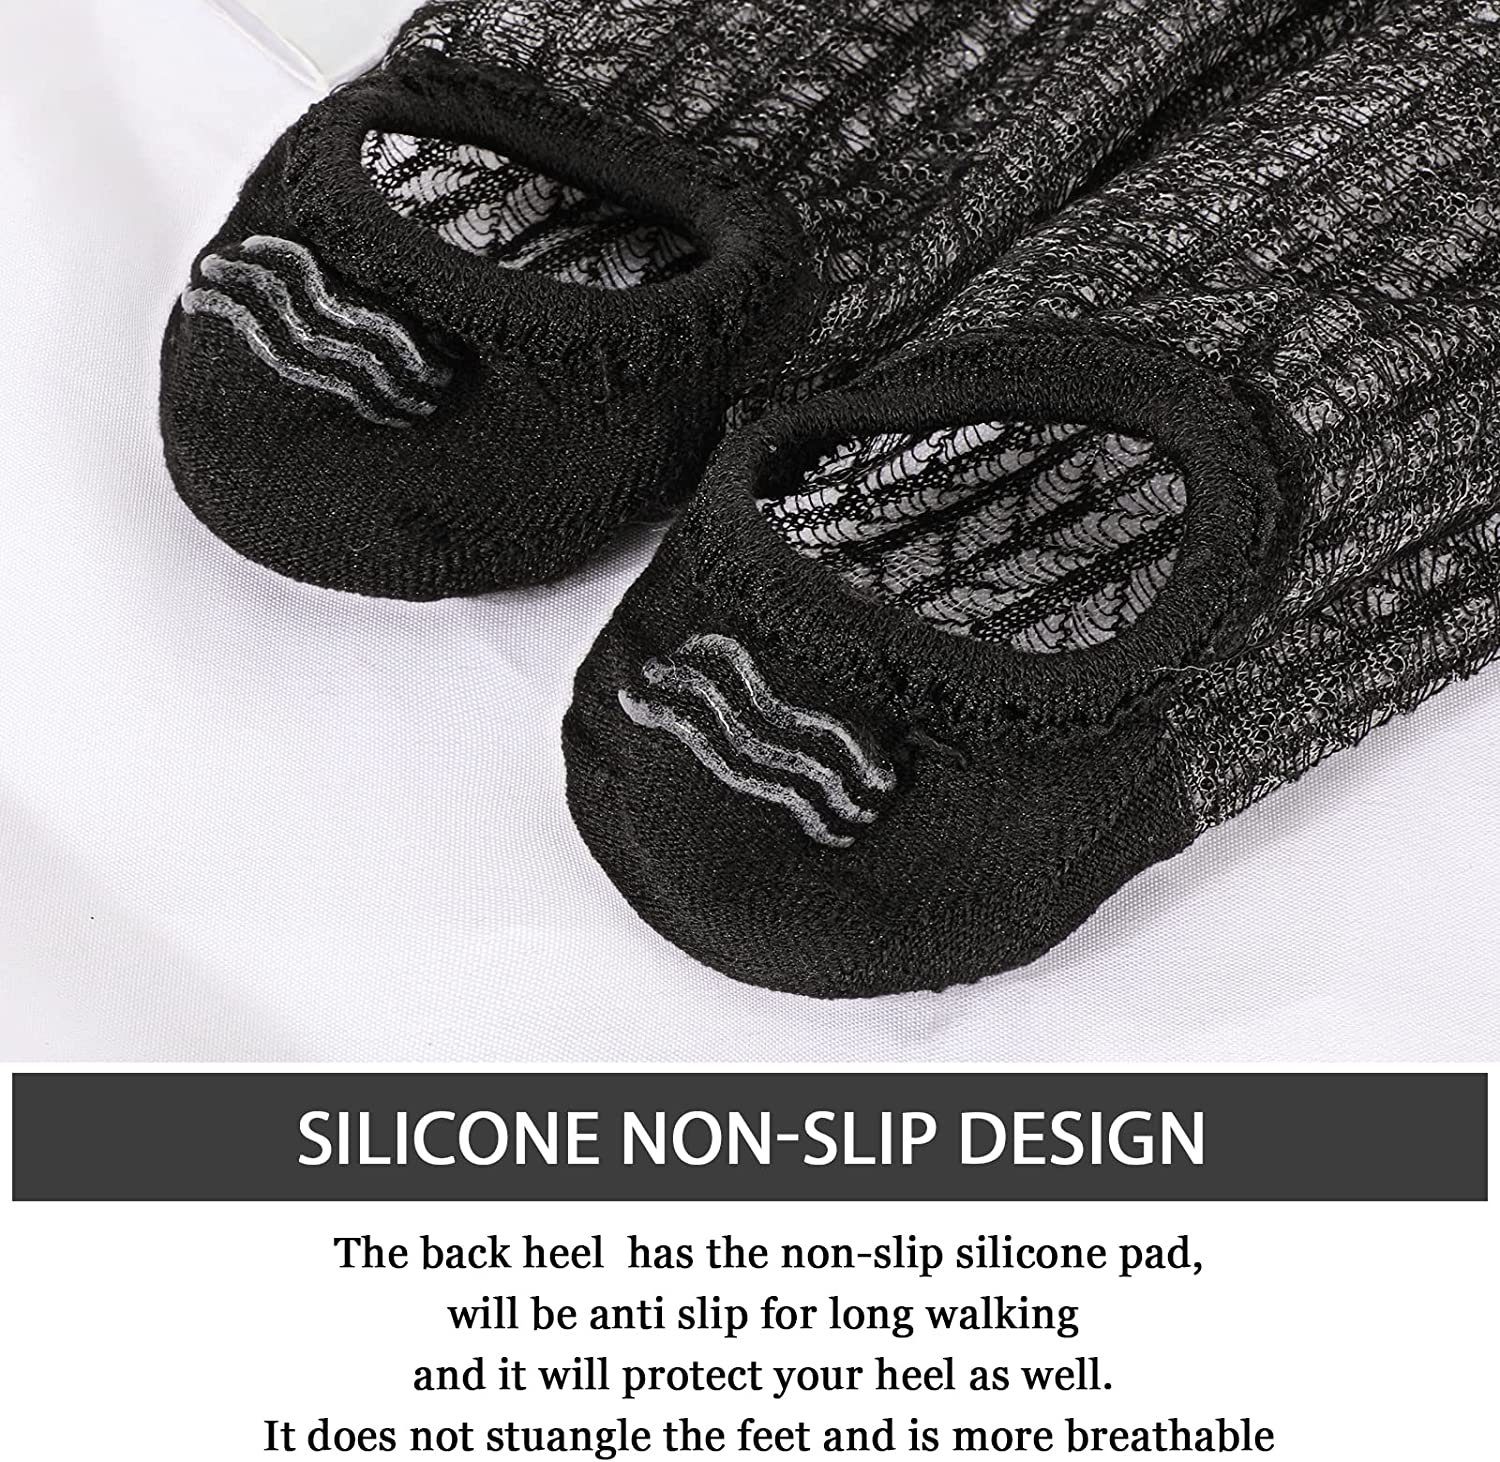 Haiaveng Kurzsocken 5 Paar Damen Socken mit Unsichtbare Low Rutschfest Silikon Hacke Cut Baumwolle Socken Unsichtbare Liner